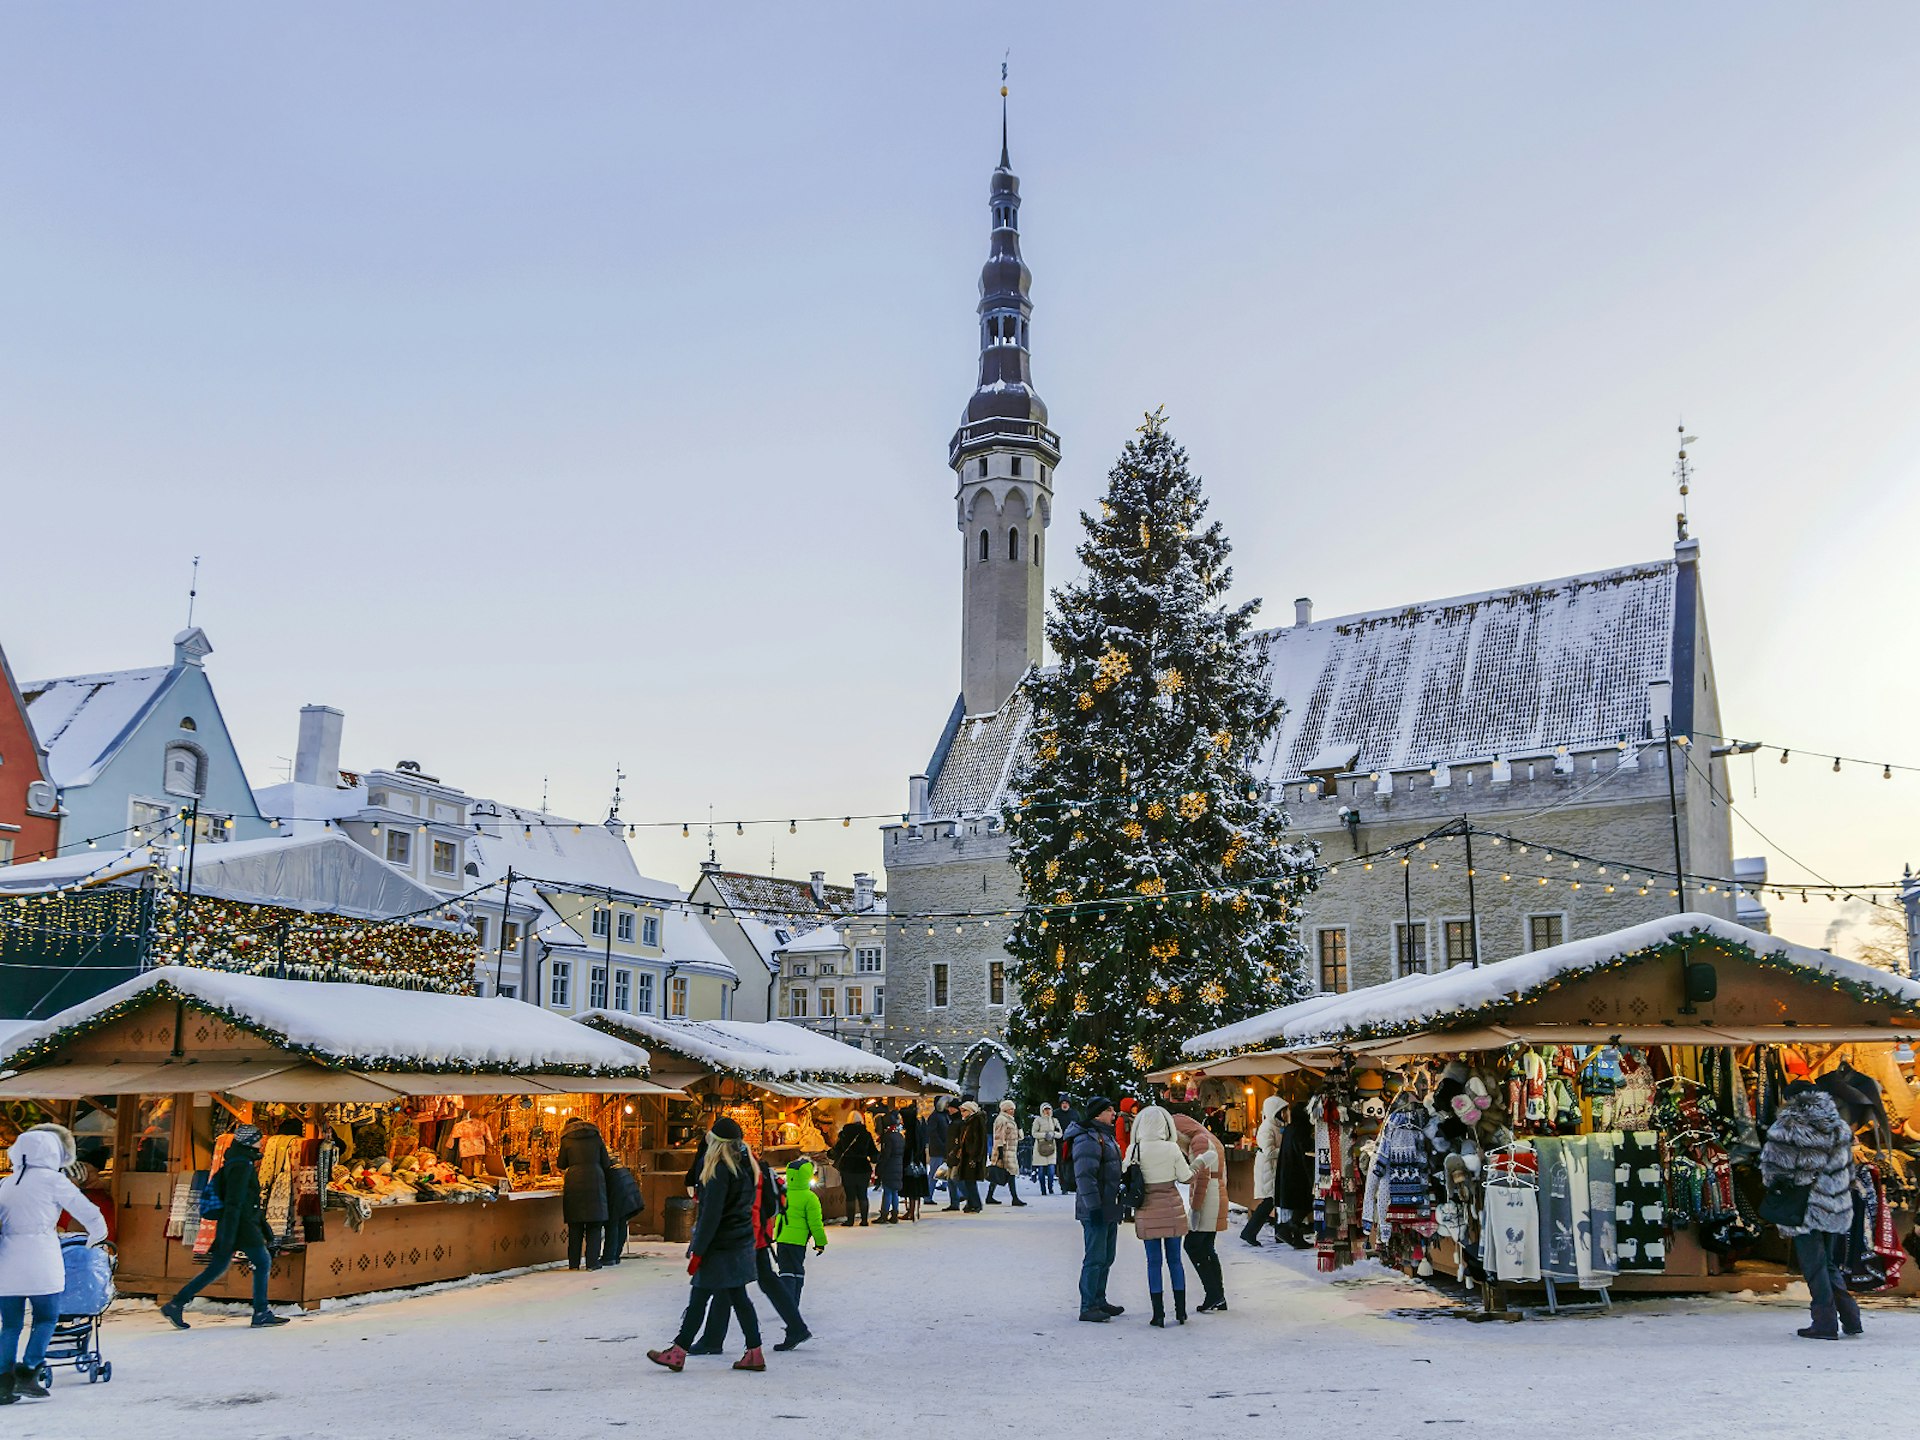 Christmas markets of Tallinn, Estonia, blanketed in snow 